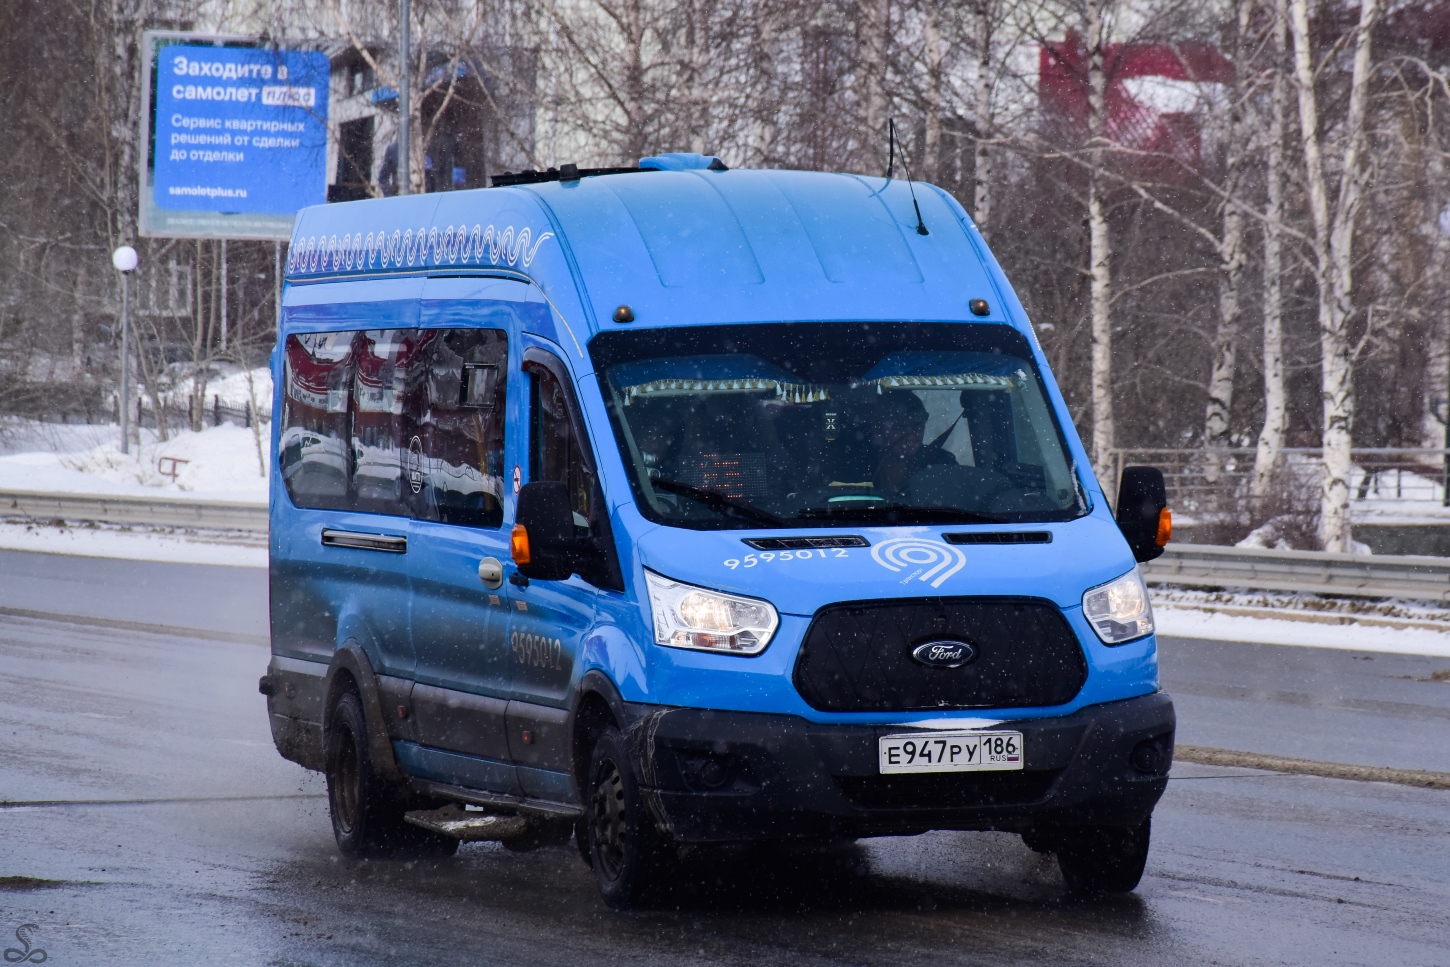 Khanty-Mansiysk, Ford Transit 136T460 FBD [RUS] # Е 947 РУ 186